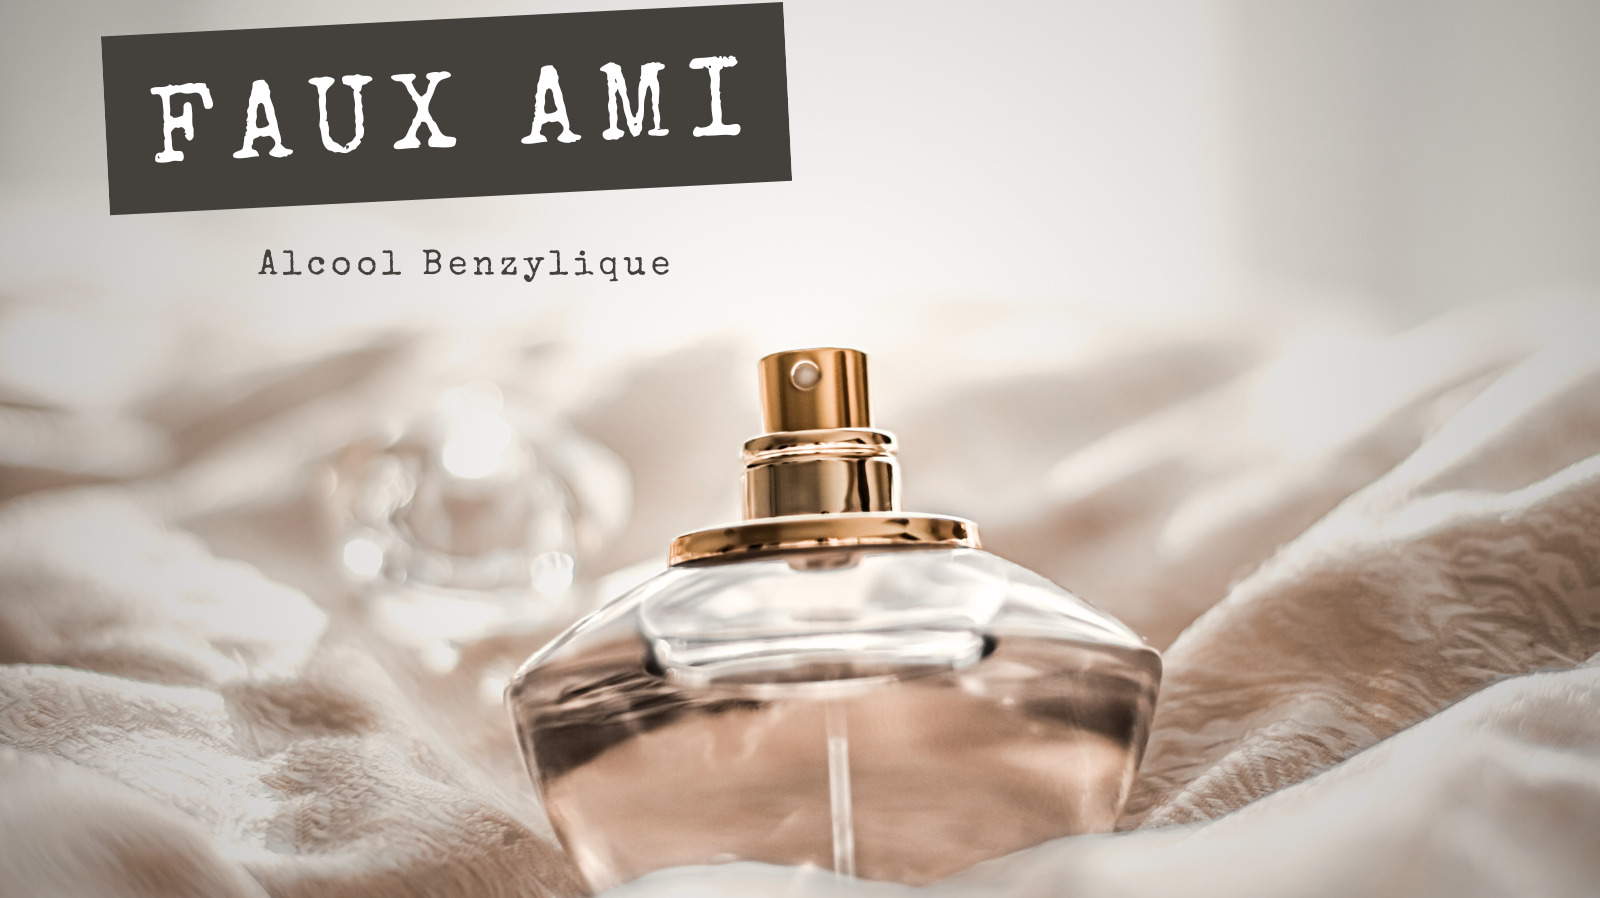 FAUX AMIS - Alcool Benzylique